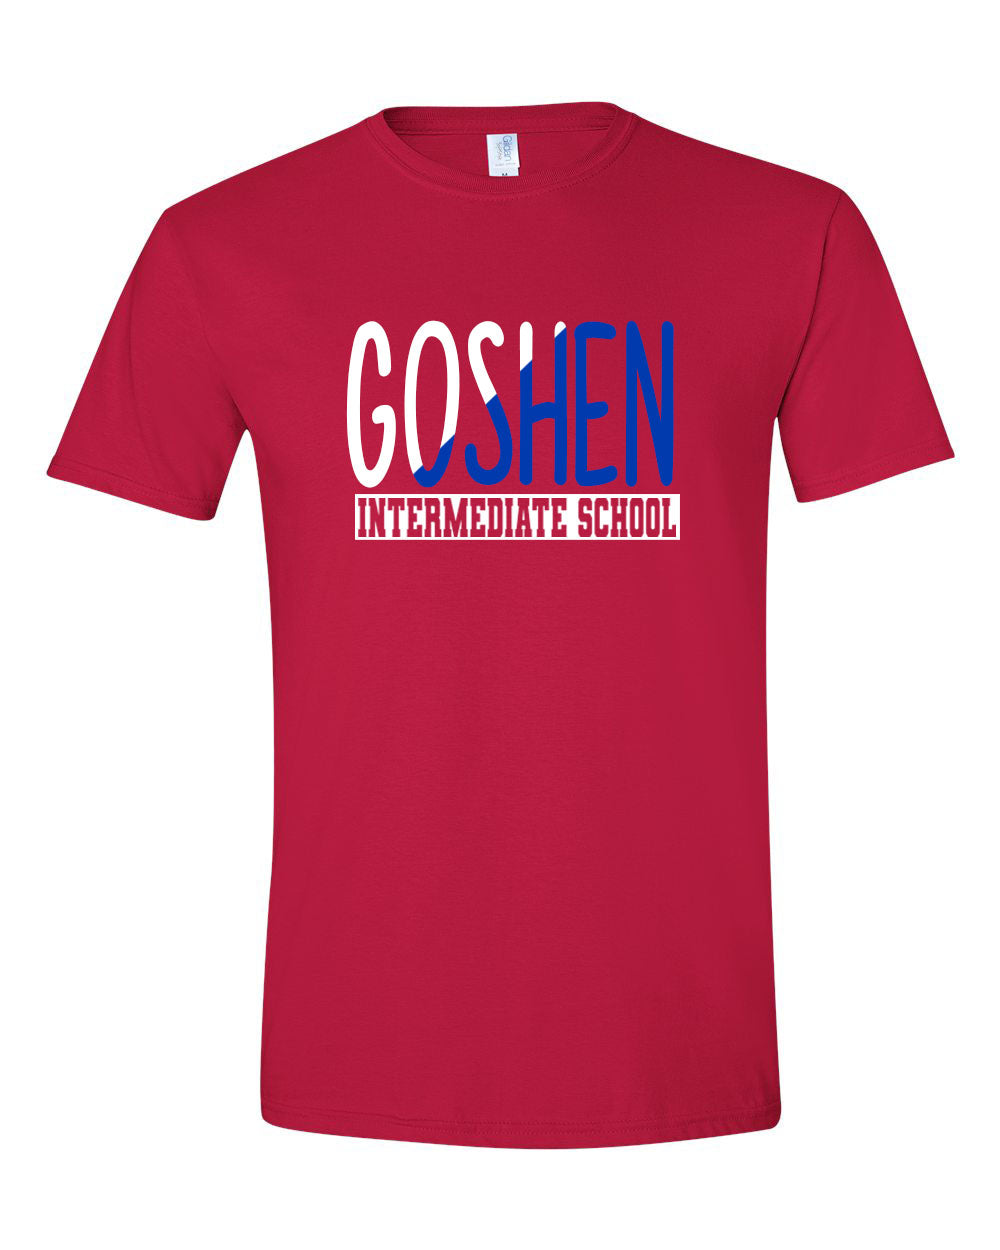 Goshen School Design 3 t-Shirt